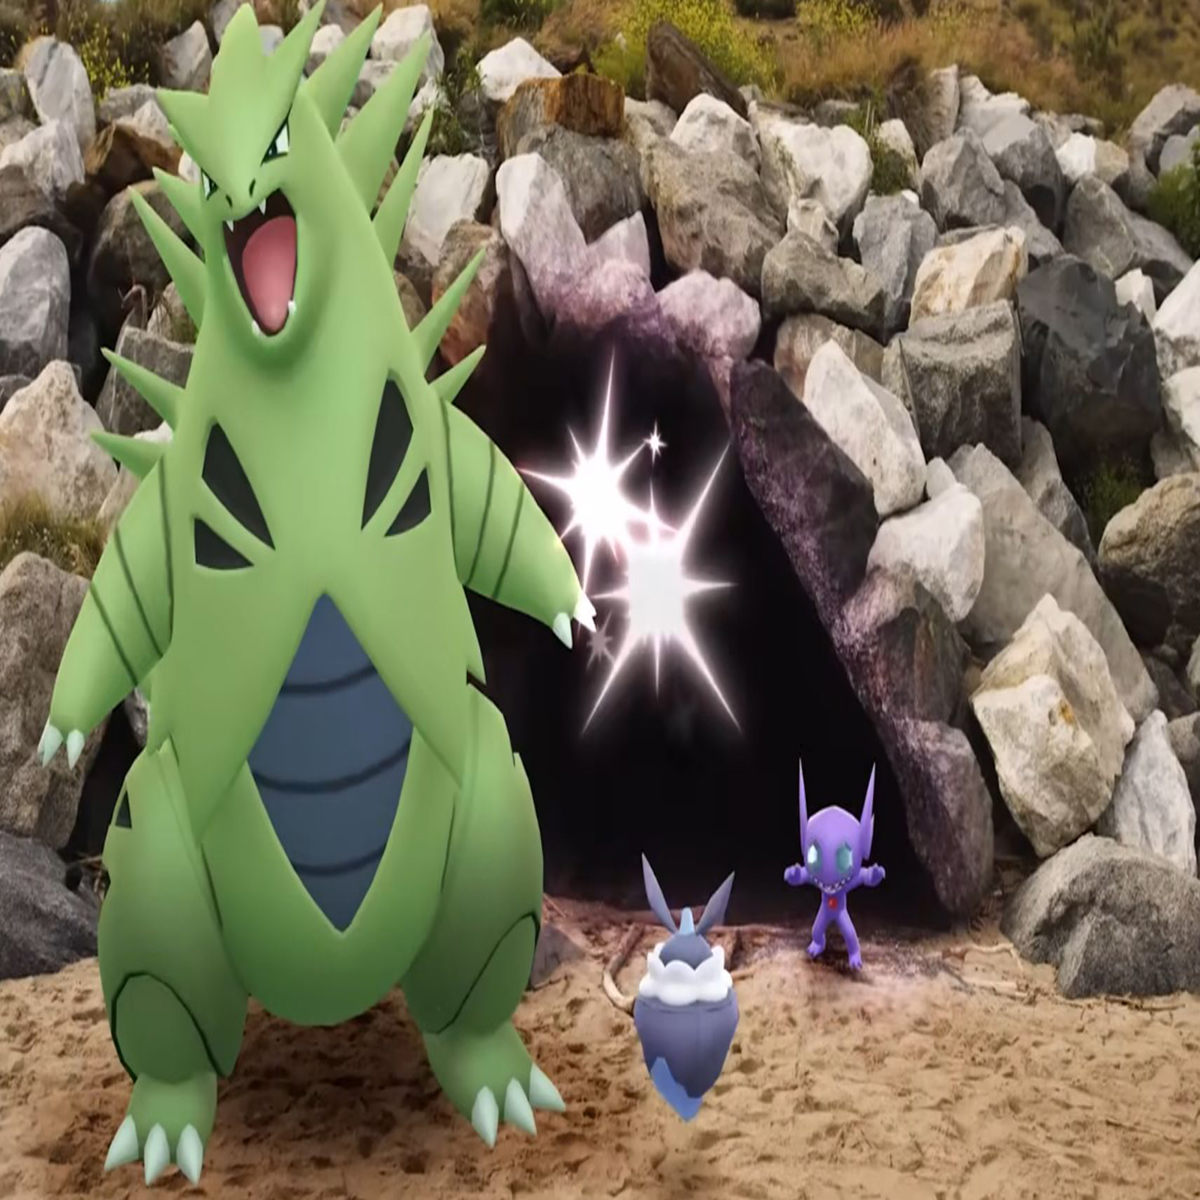 Moltres Raids Are Starting To Spawn In 'Pokémon GO